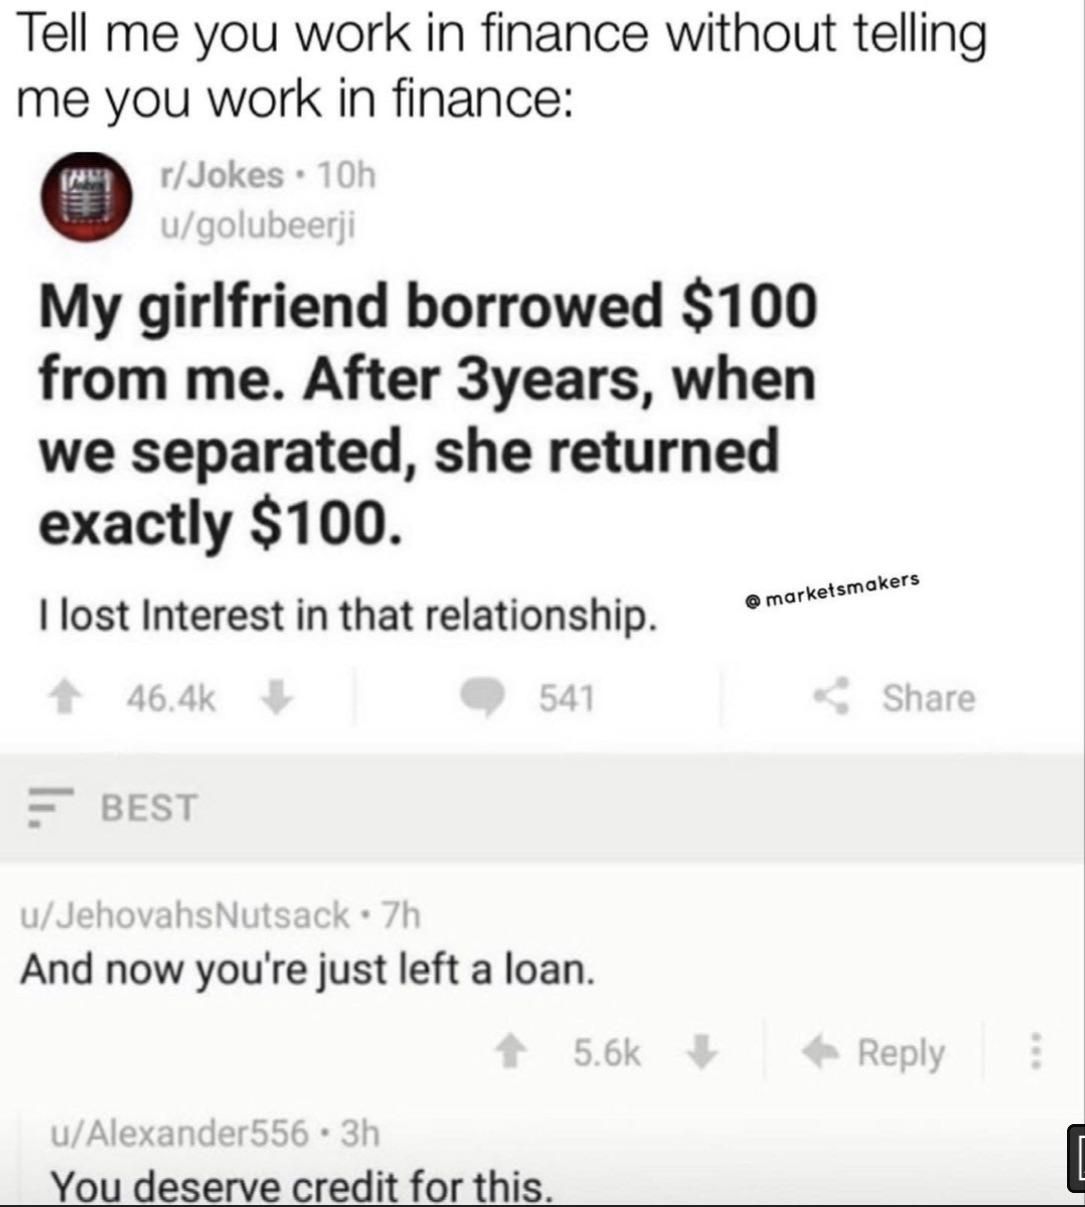 A financial relationship